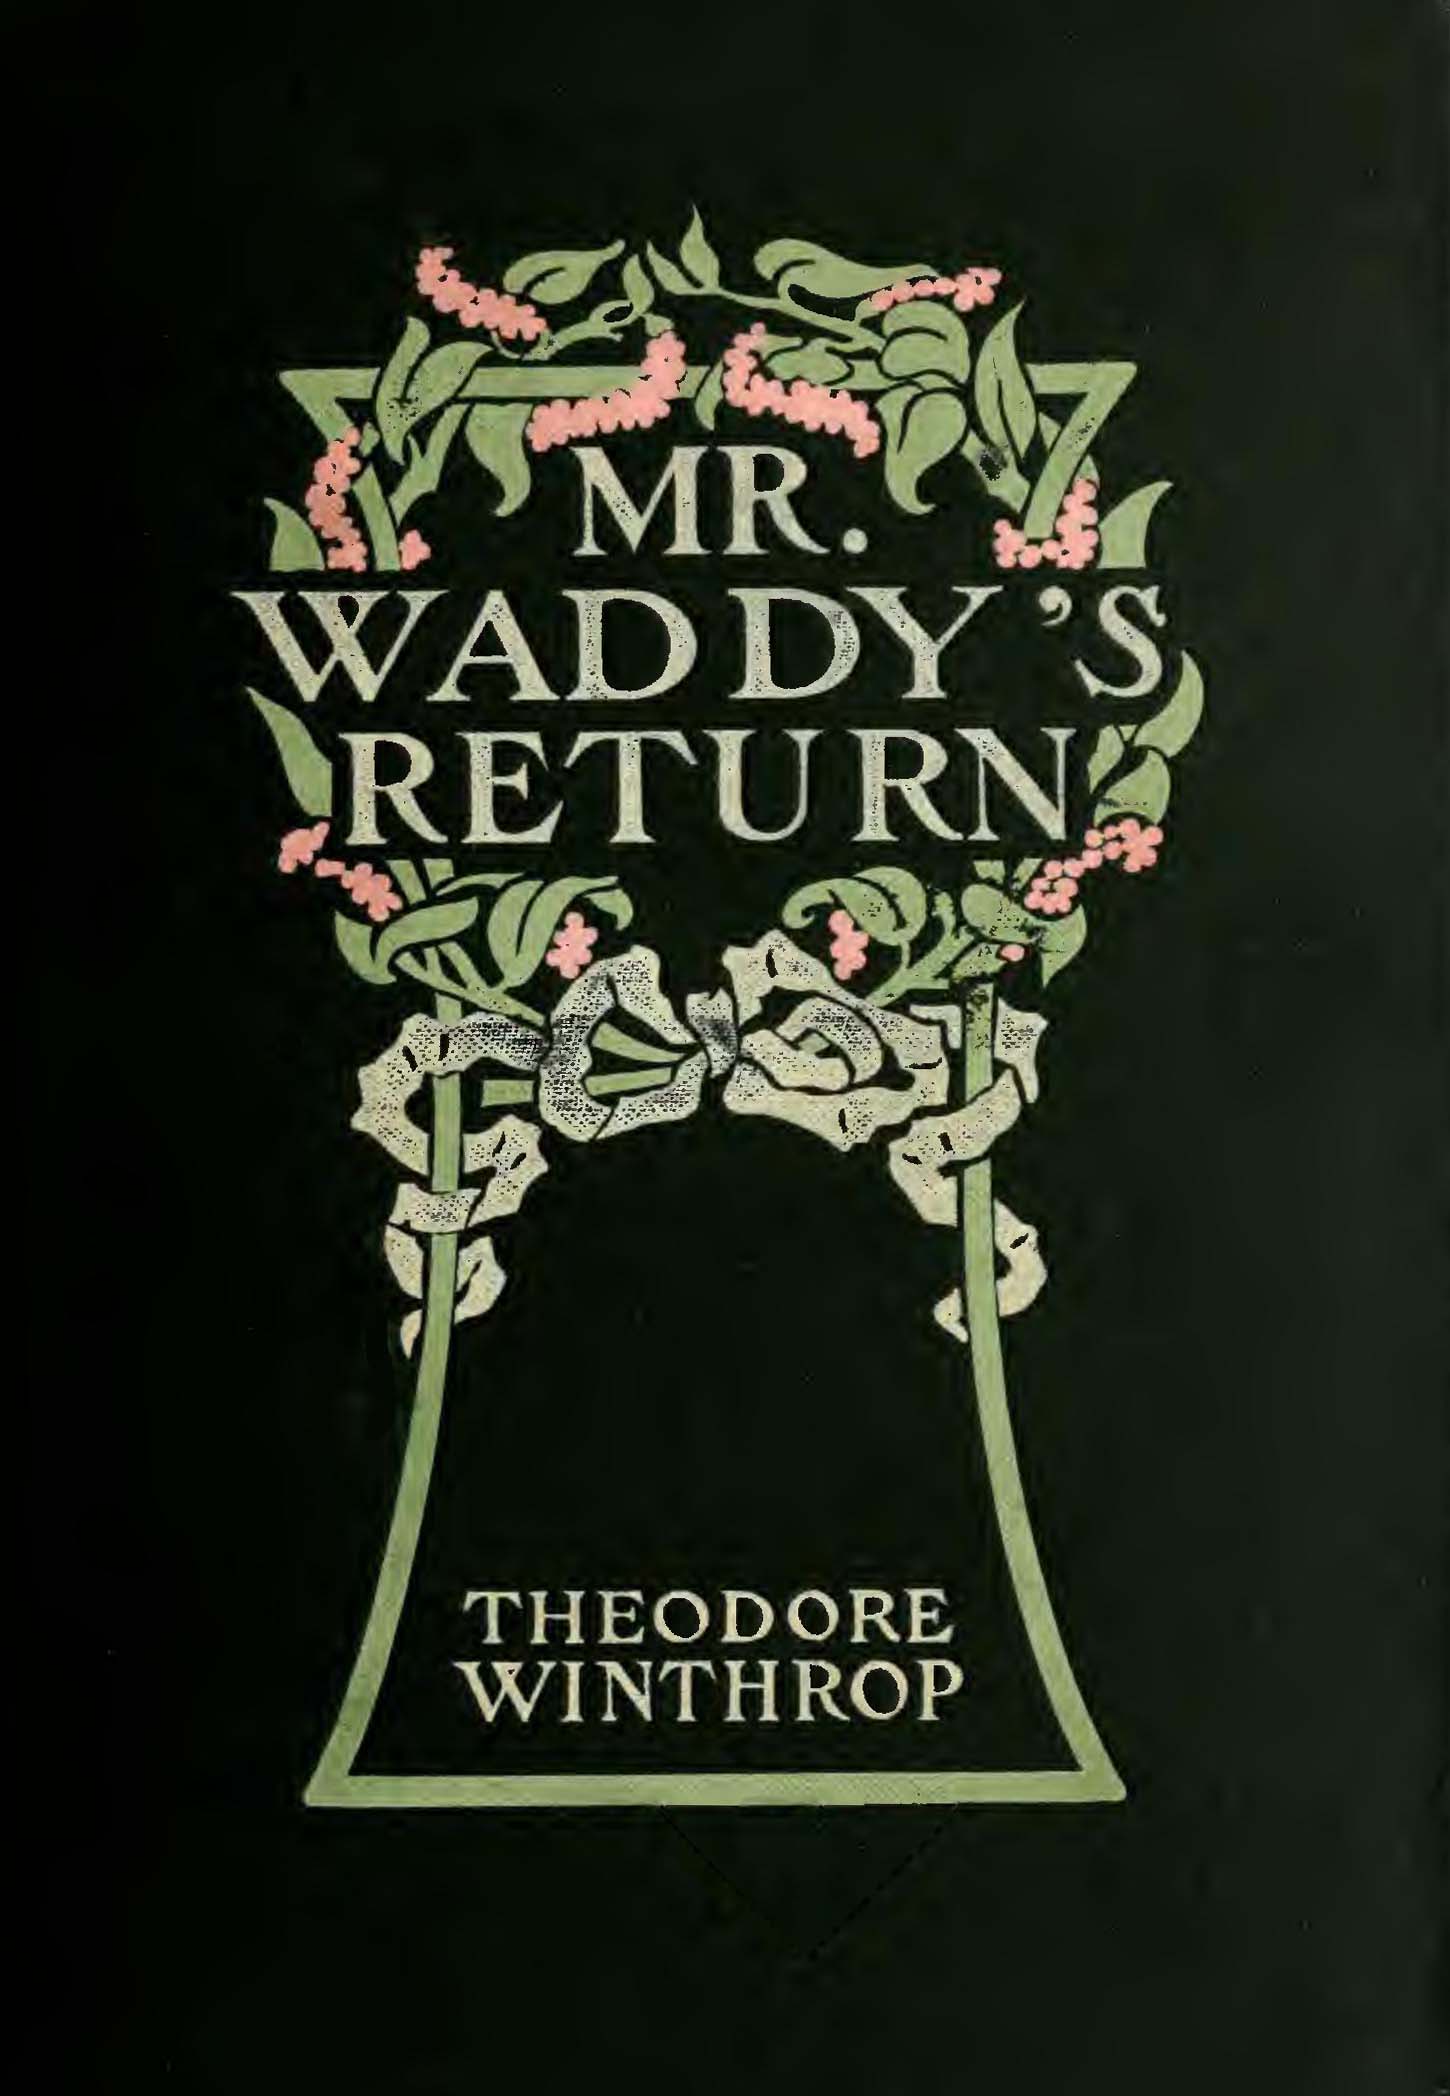 Mr. Waddy's Return, by Theodore Winthrop—A Project Gutenberg eBook